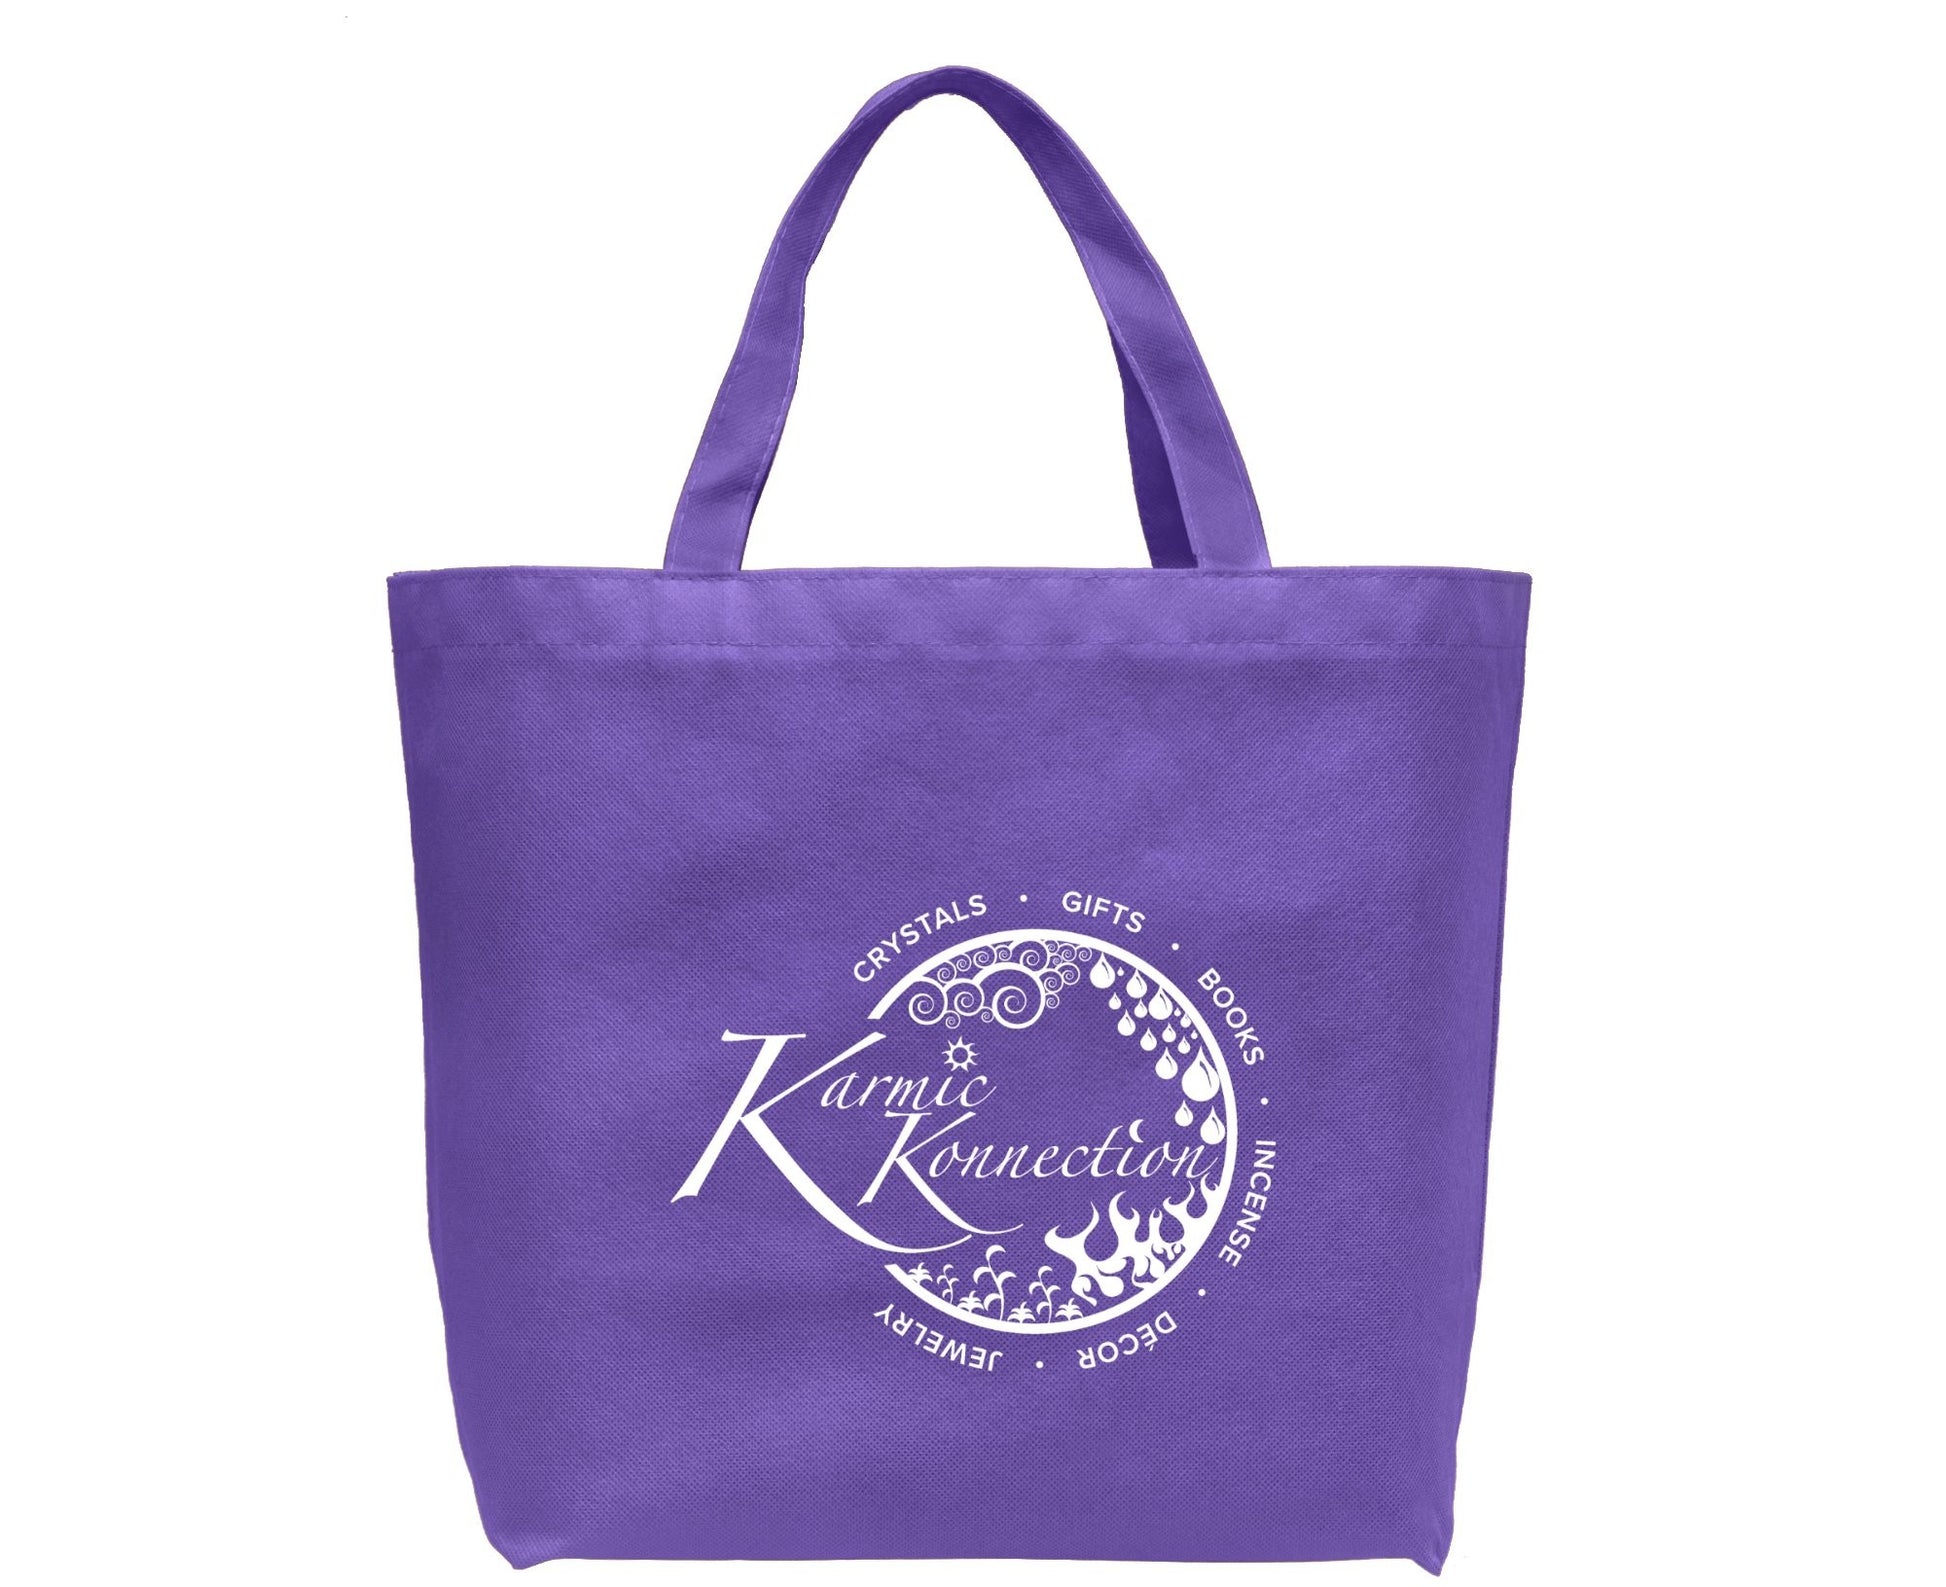 purple and white karmic konnection tote bag